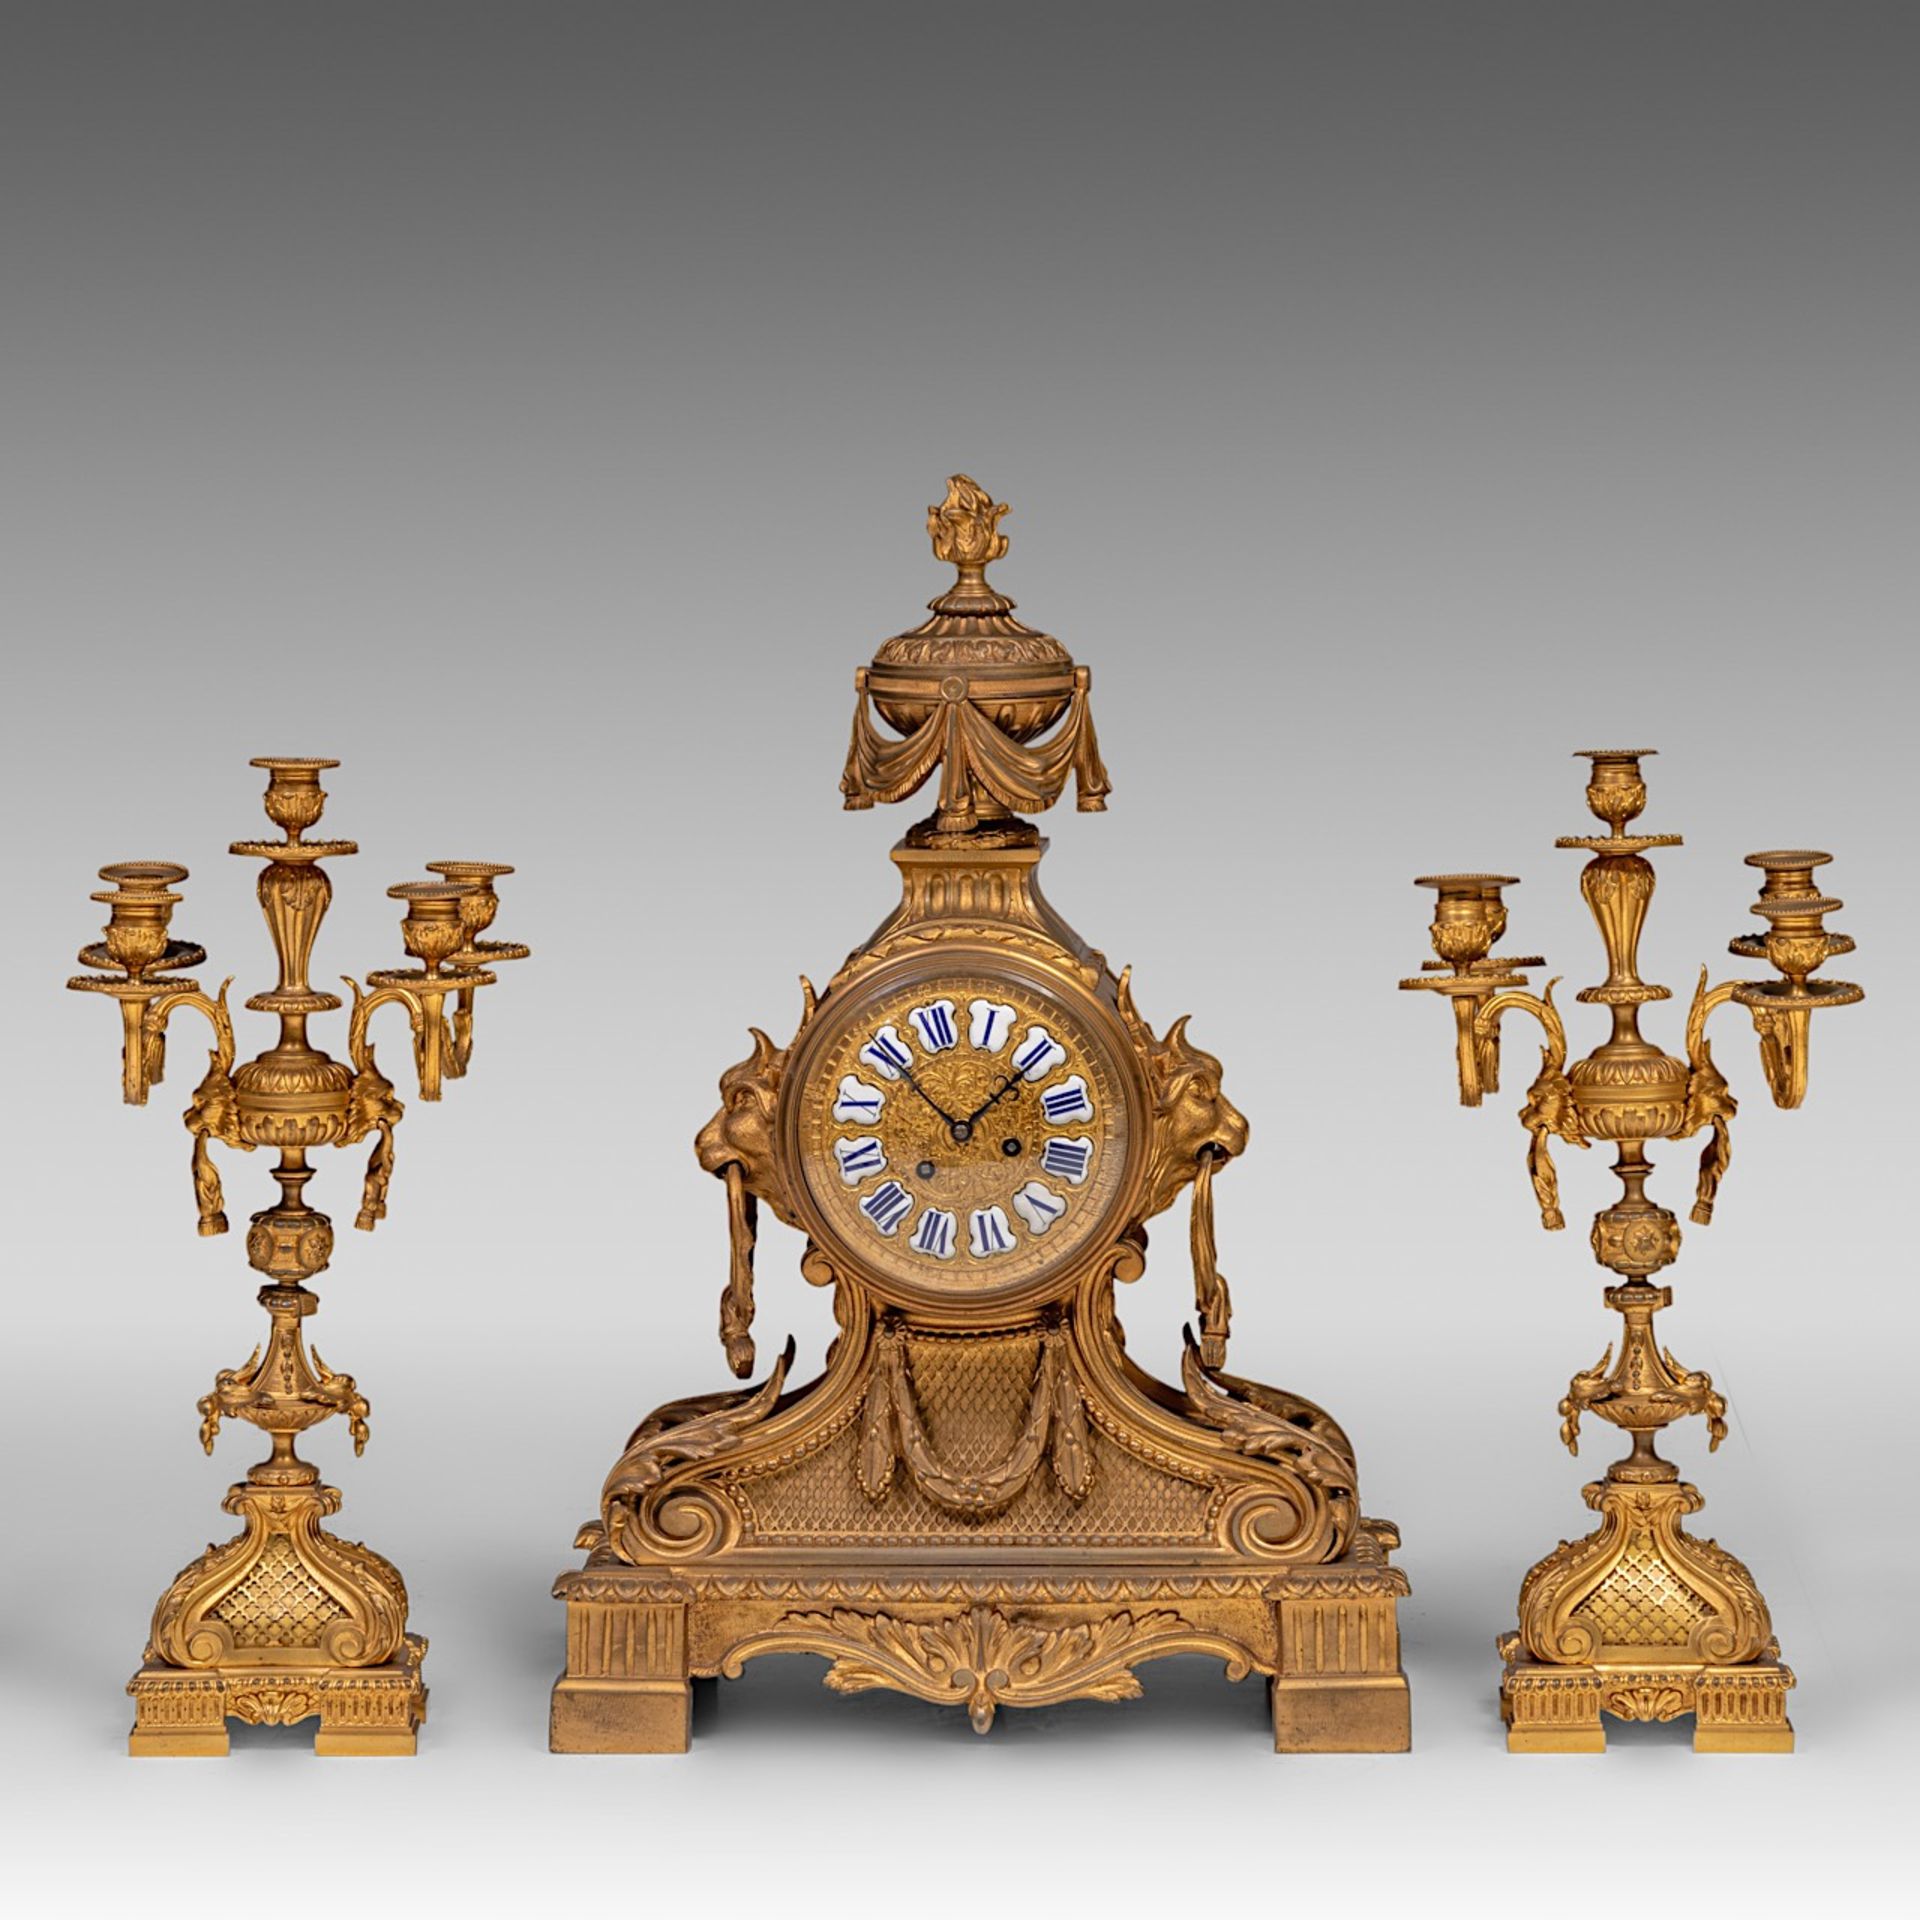 A three-piece Neoclassical gilt bronze mantle clock, H 50 - 65 cm